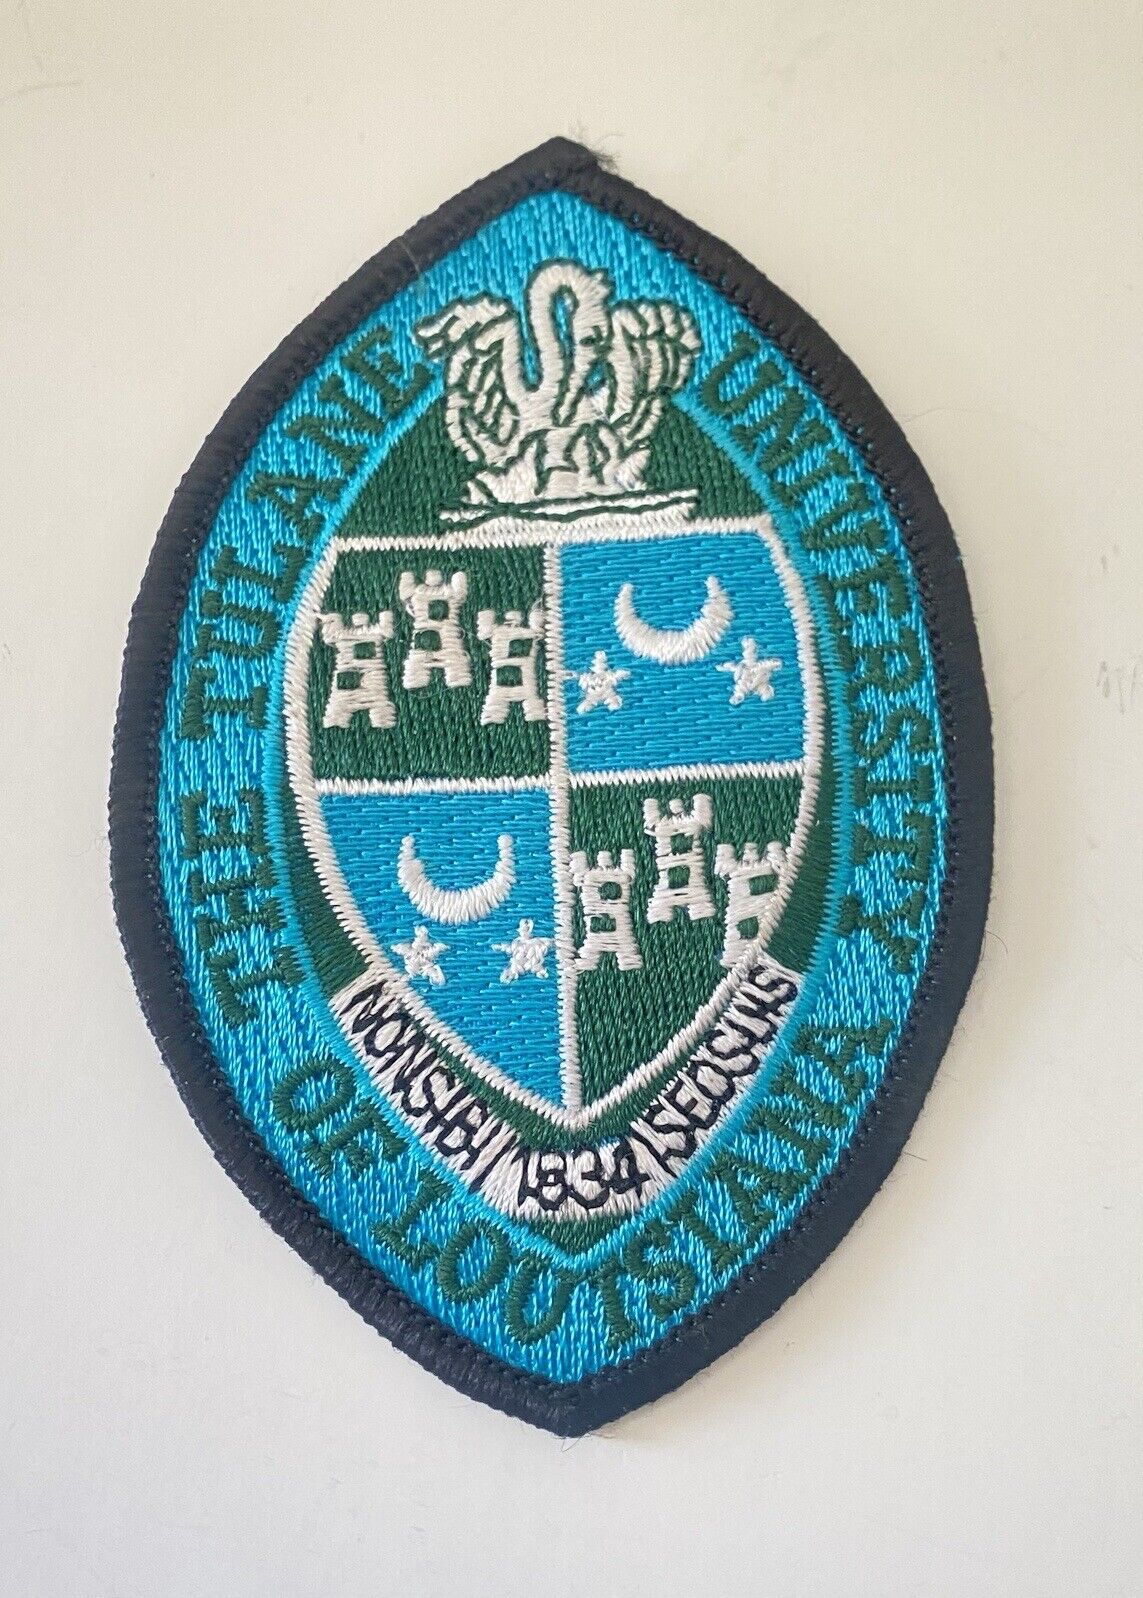 Tulane University of Louisiana coat of arms patch